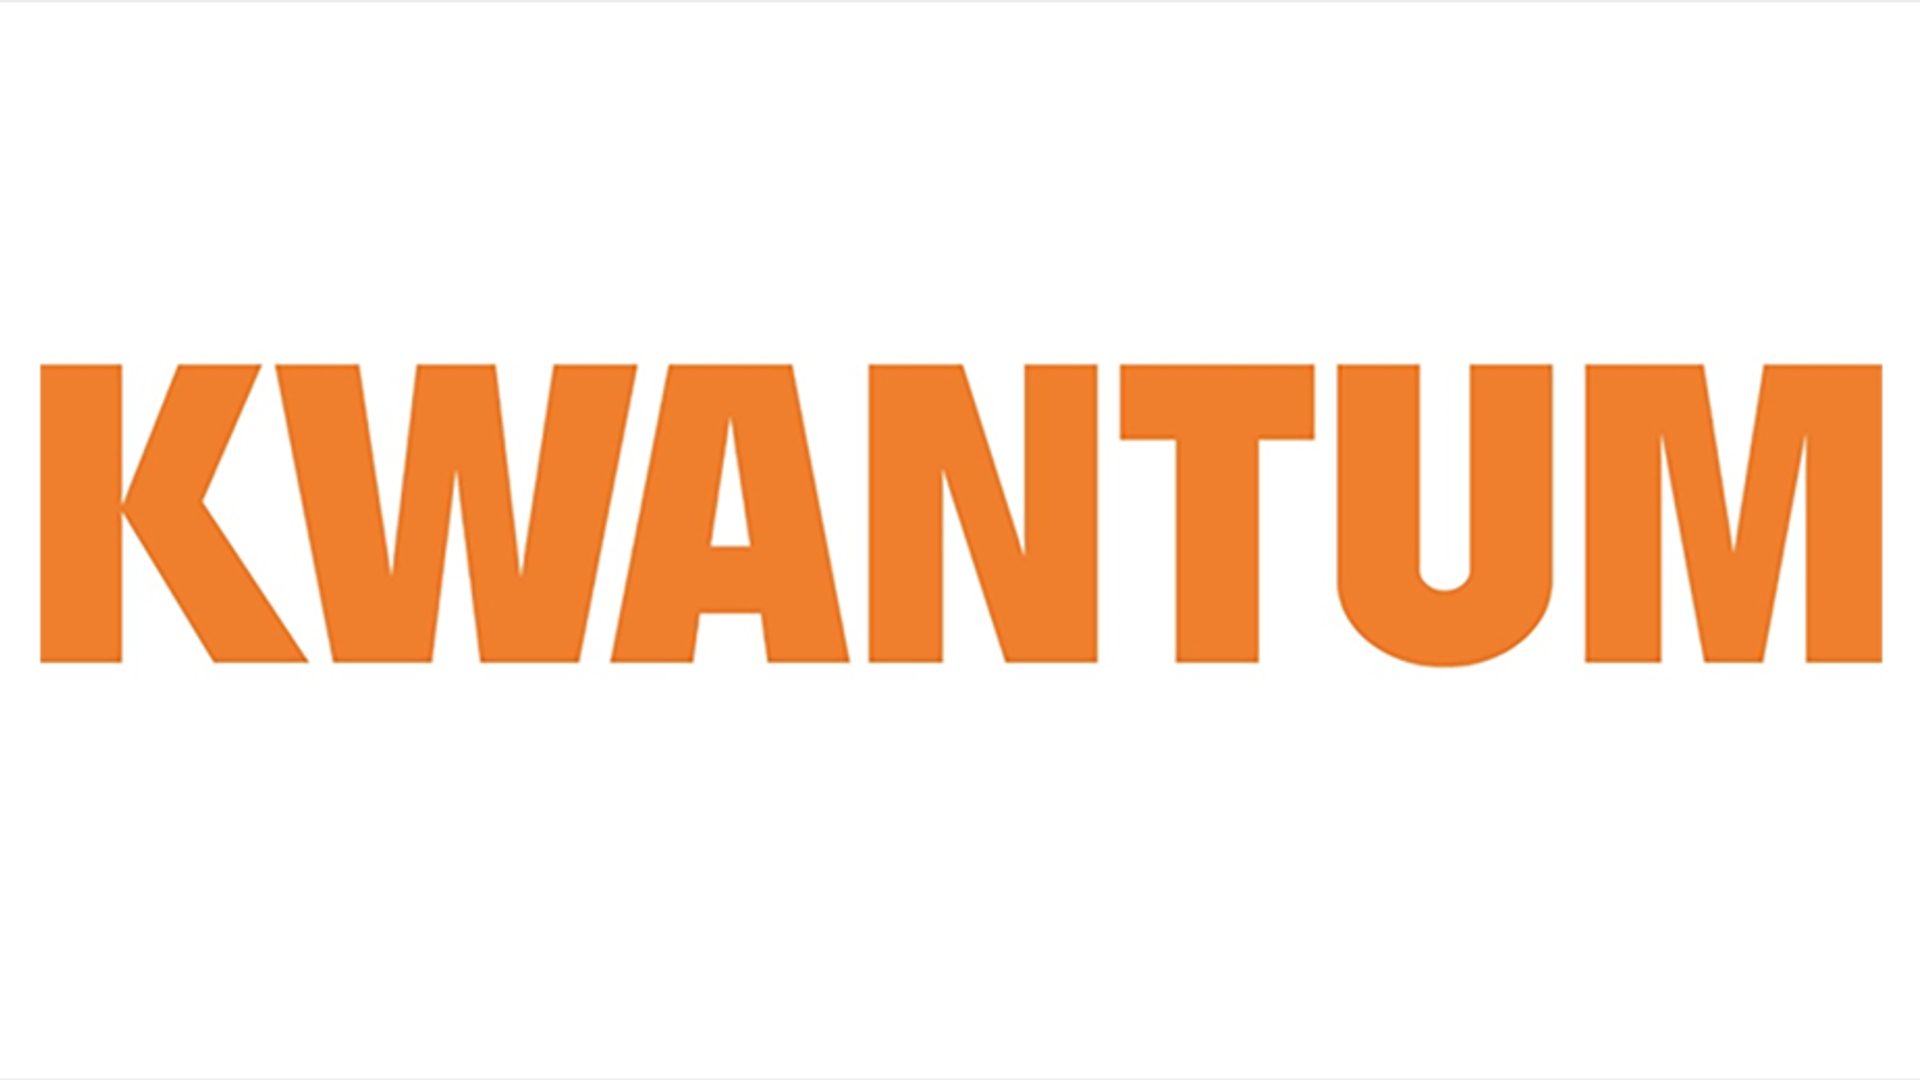 Kwantum logo 930x520